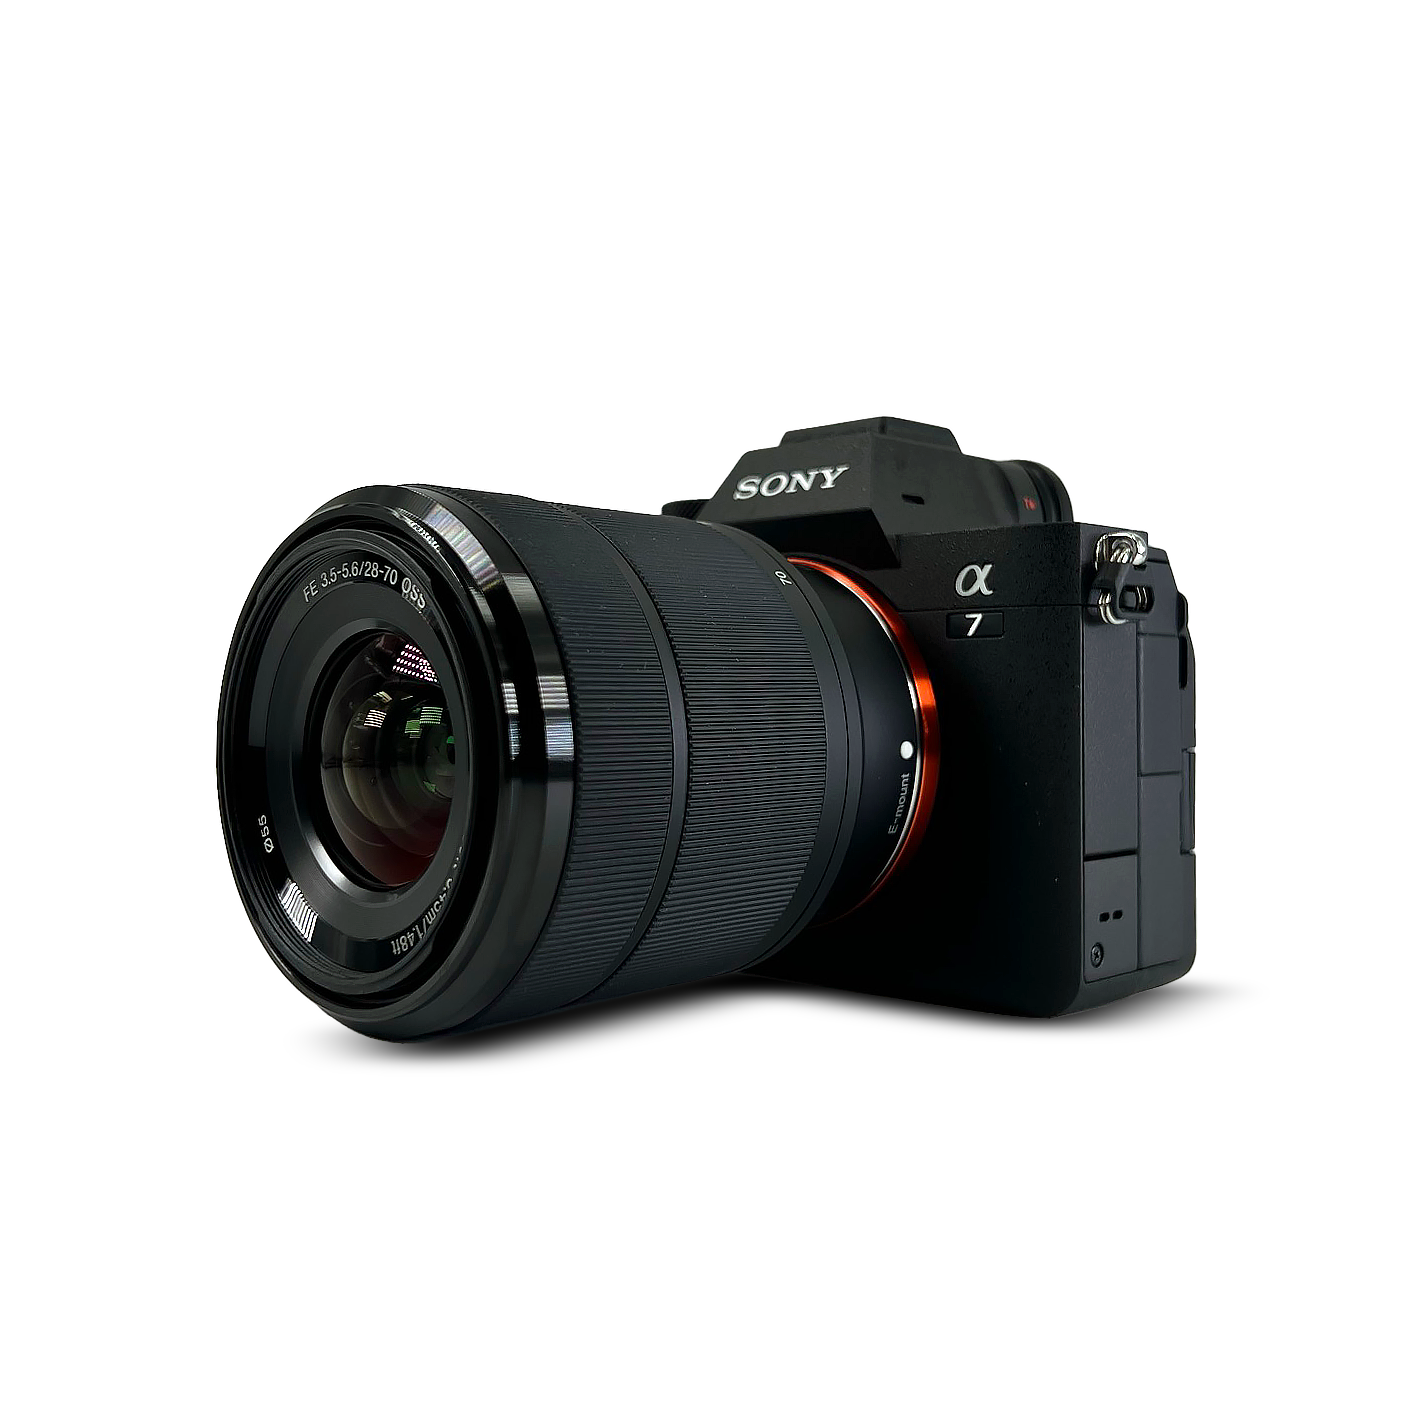 Sony Alpha A7 IV Full-Frame Mirrorless Camera w/ Sony FE 28-70mm f/3.5-5.6 OSS Lens $2119 + Free Shipping